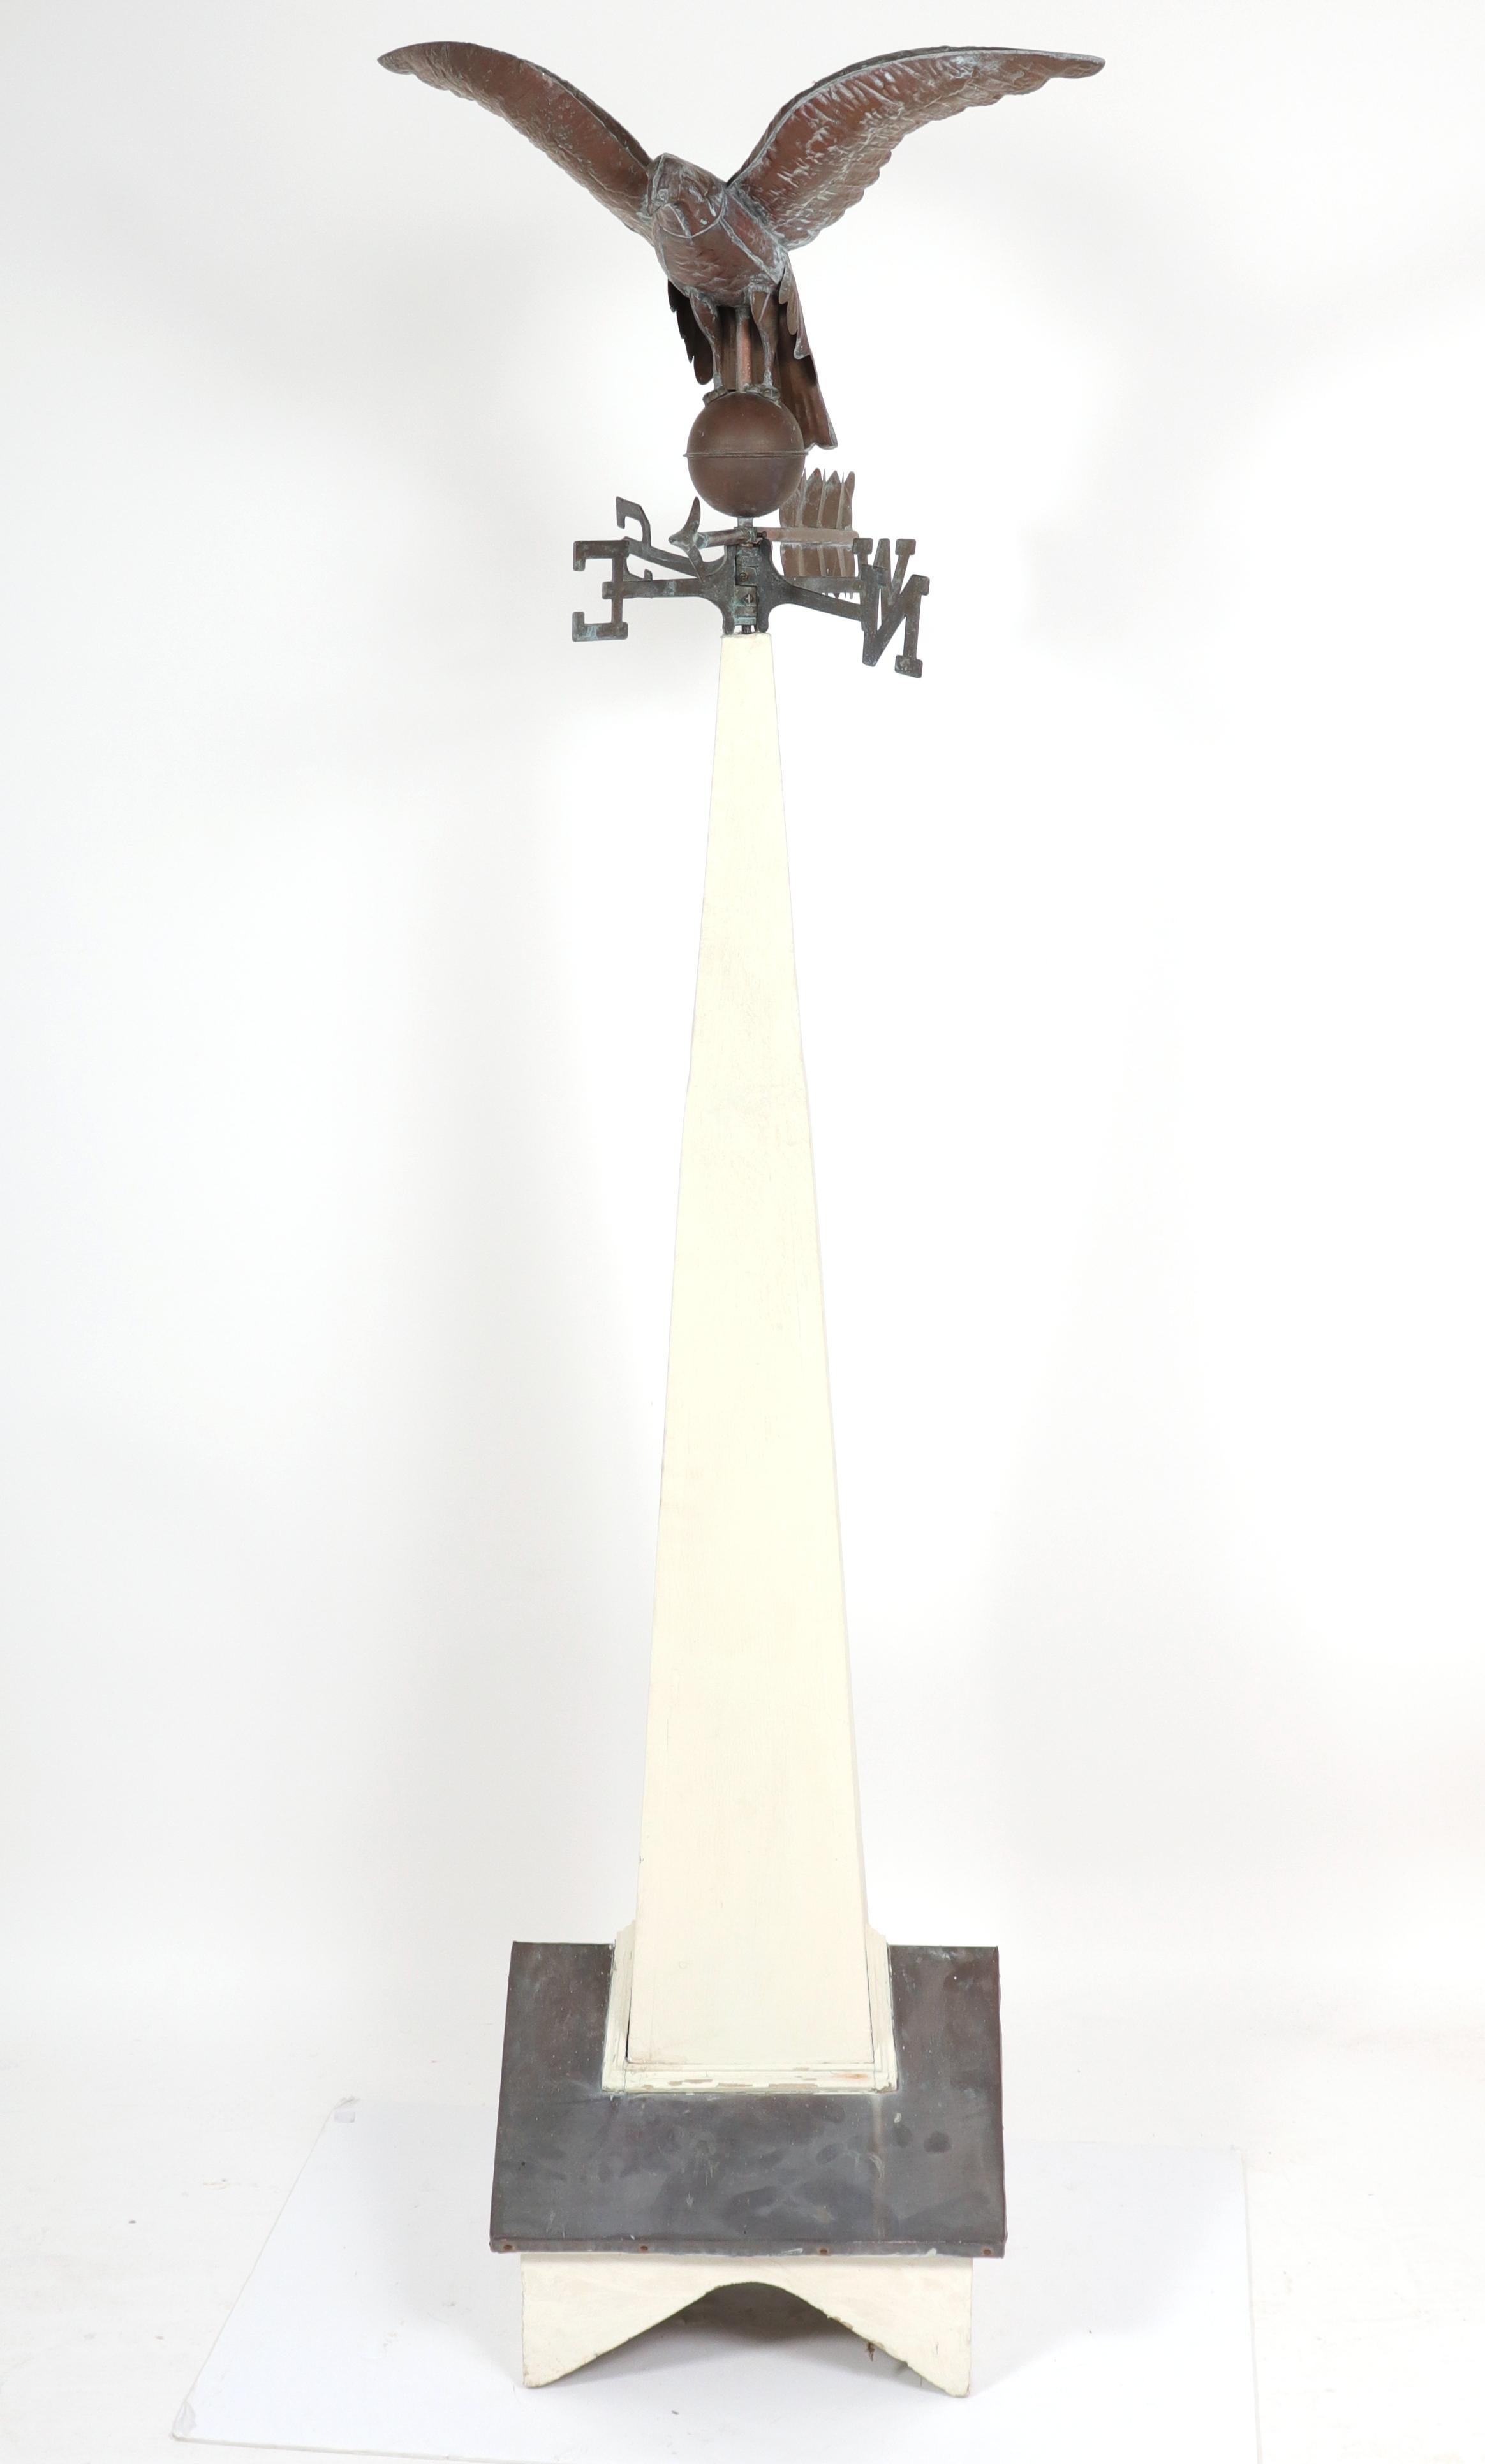 Vintage American eagle weather-vane mounted on wood spire.
Measures: Weather-vane 18